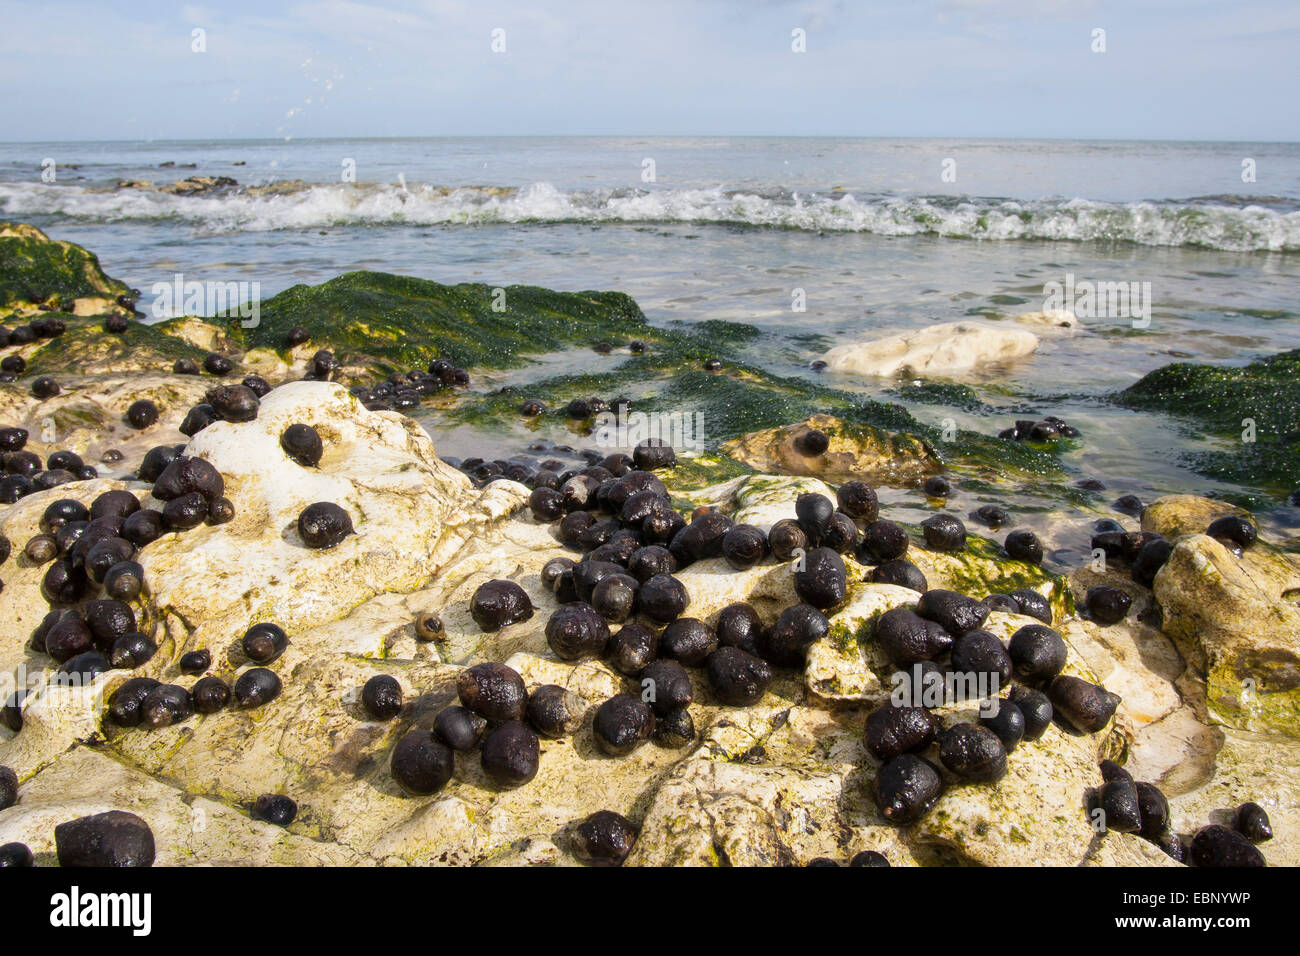 common periwinkle, common winkle, edible winkle (Littorina littorea), winkles at ebb-tide on stones, Germany Stock Photo